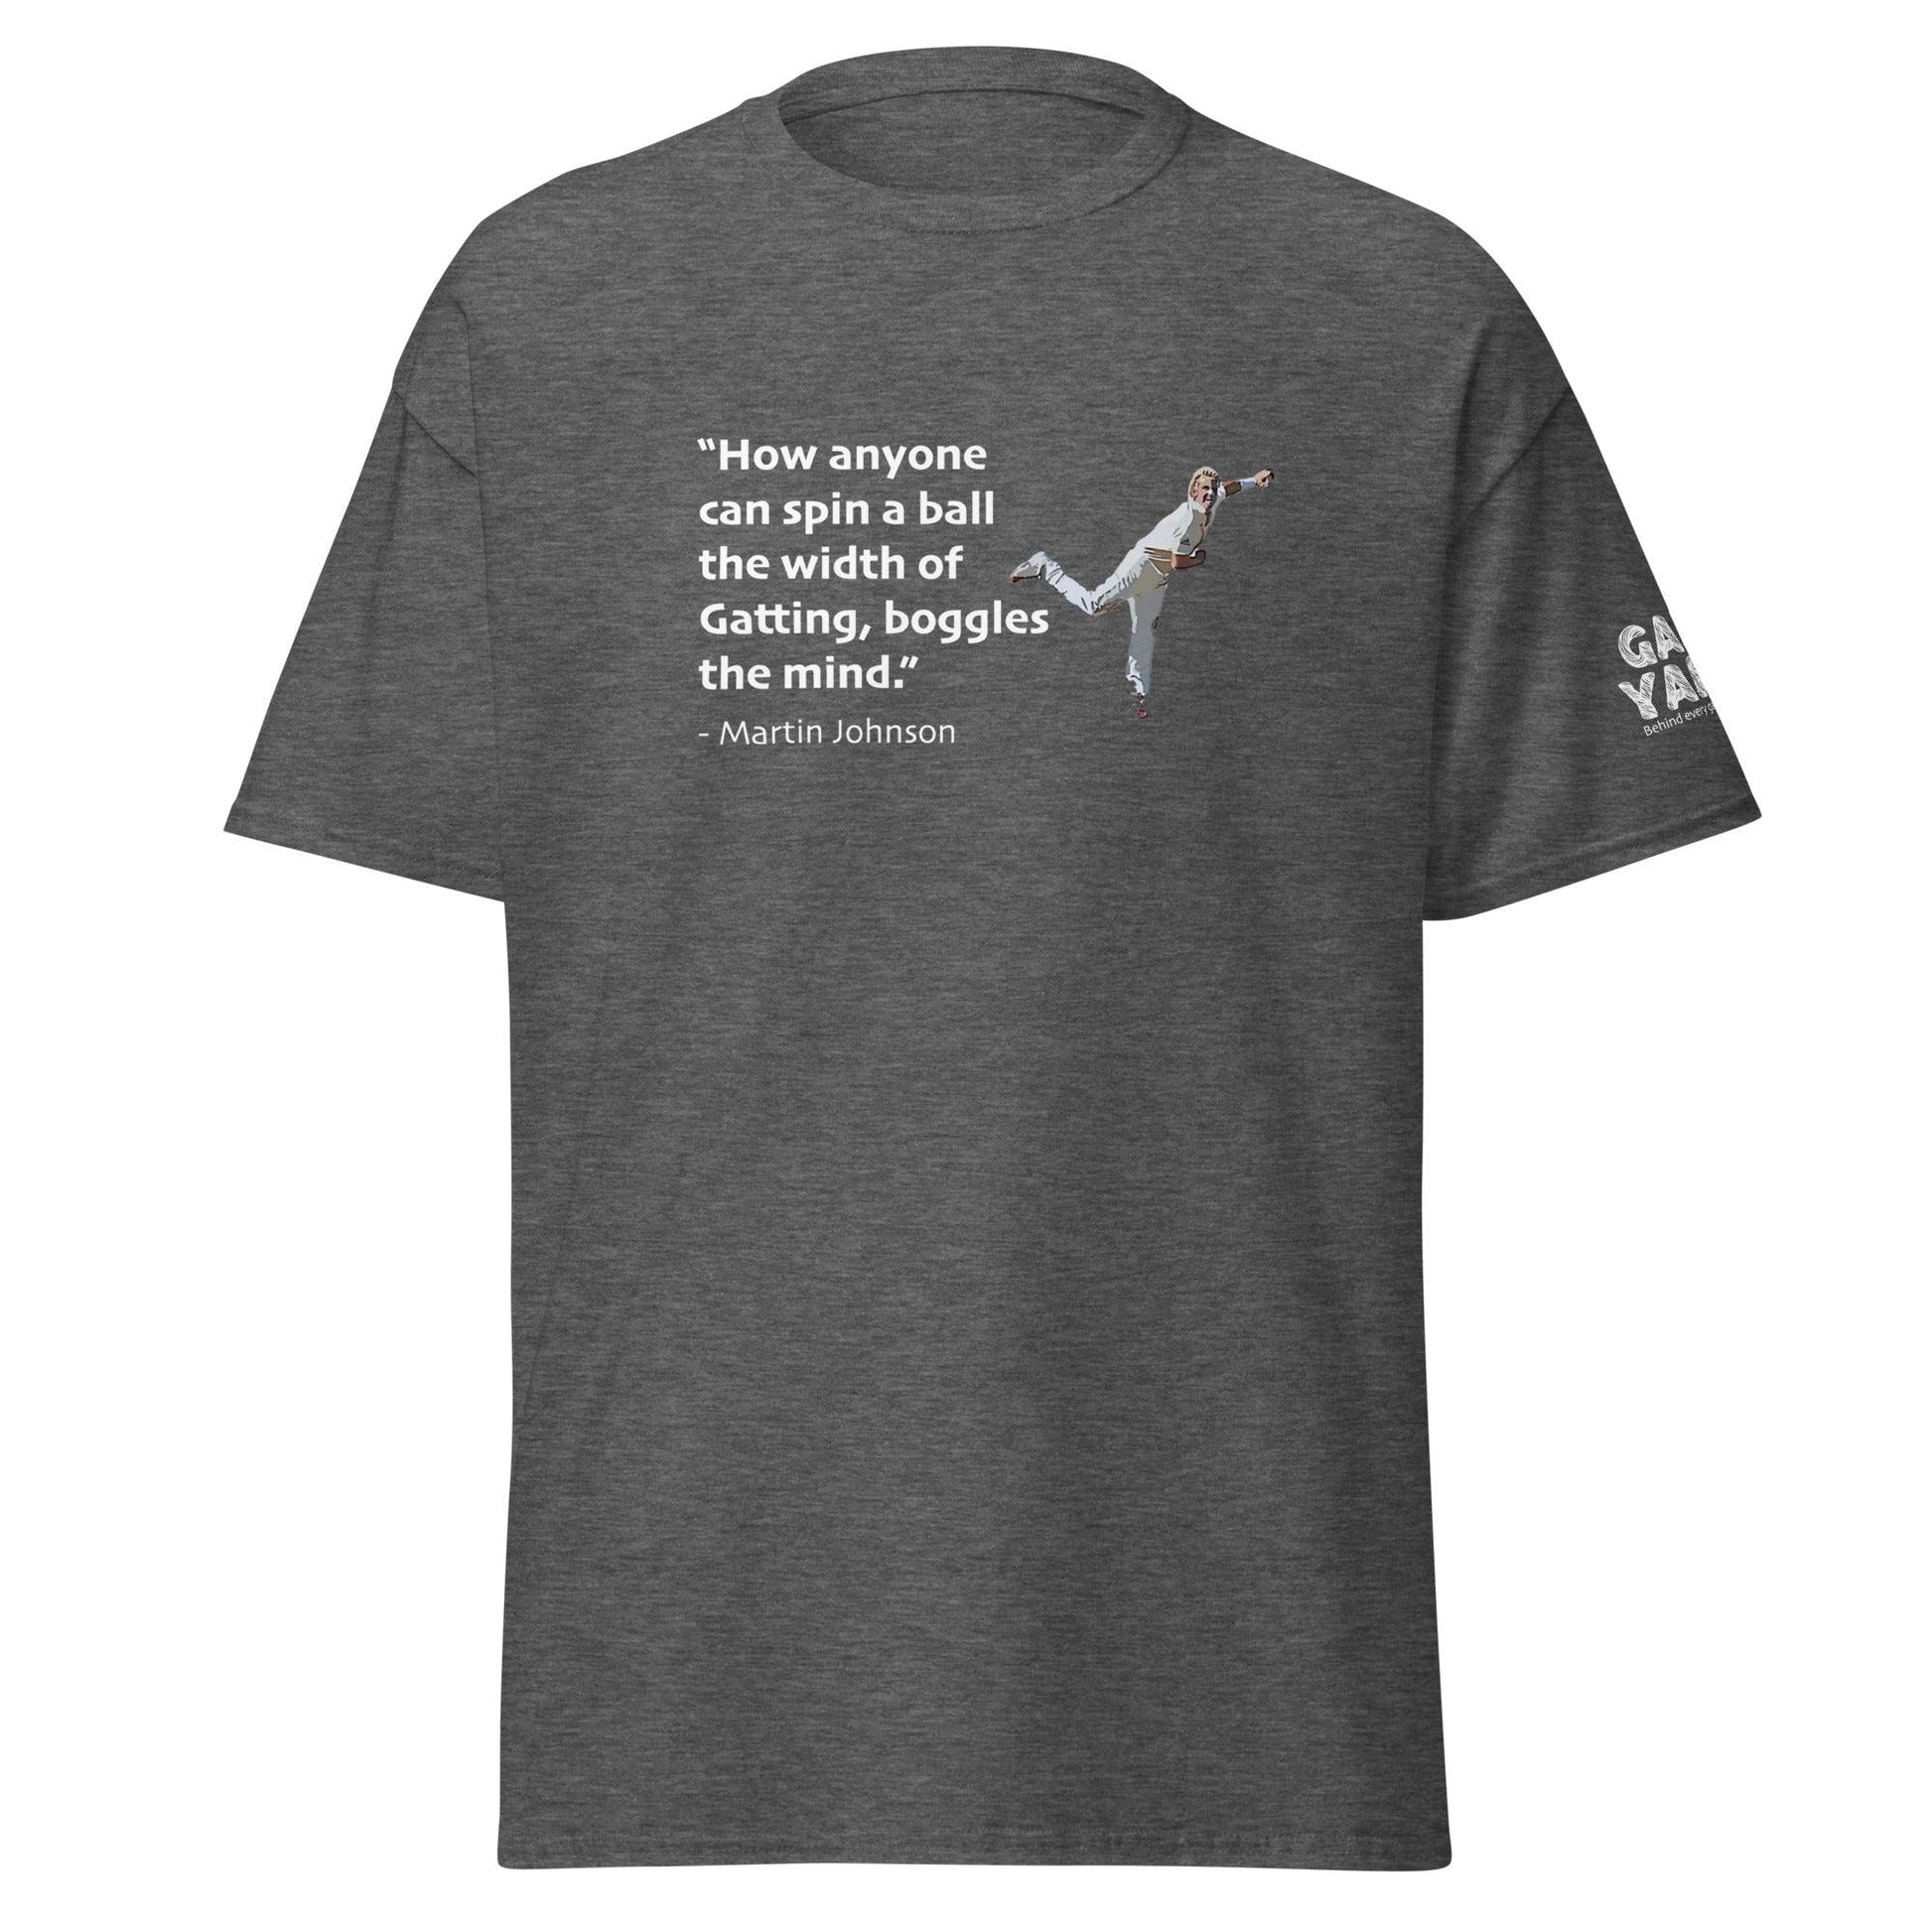 Shane Warne Gatting Spin Size t-shirt by Game Yarns